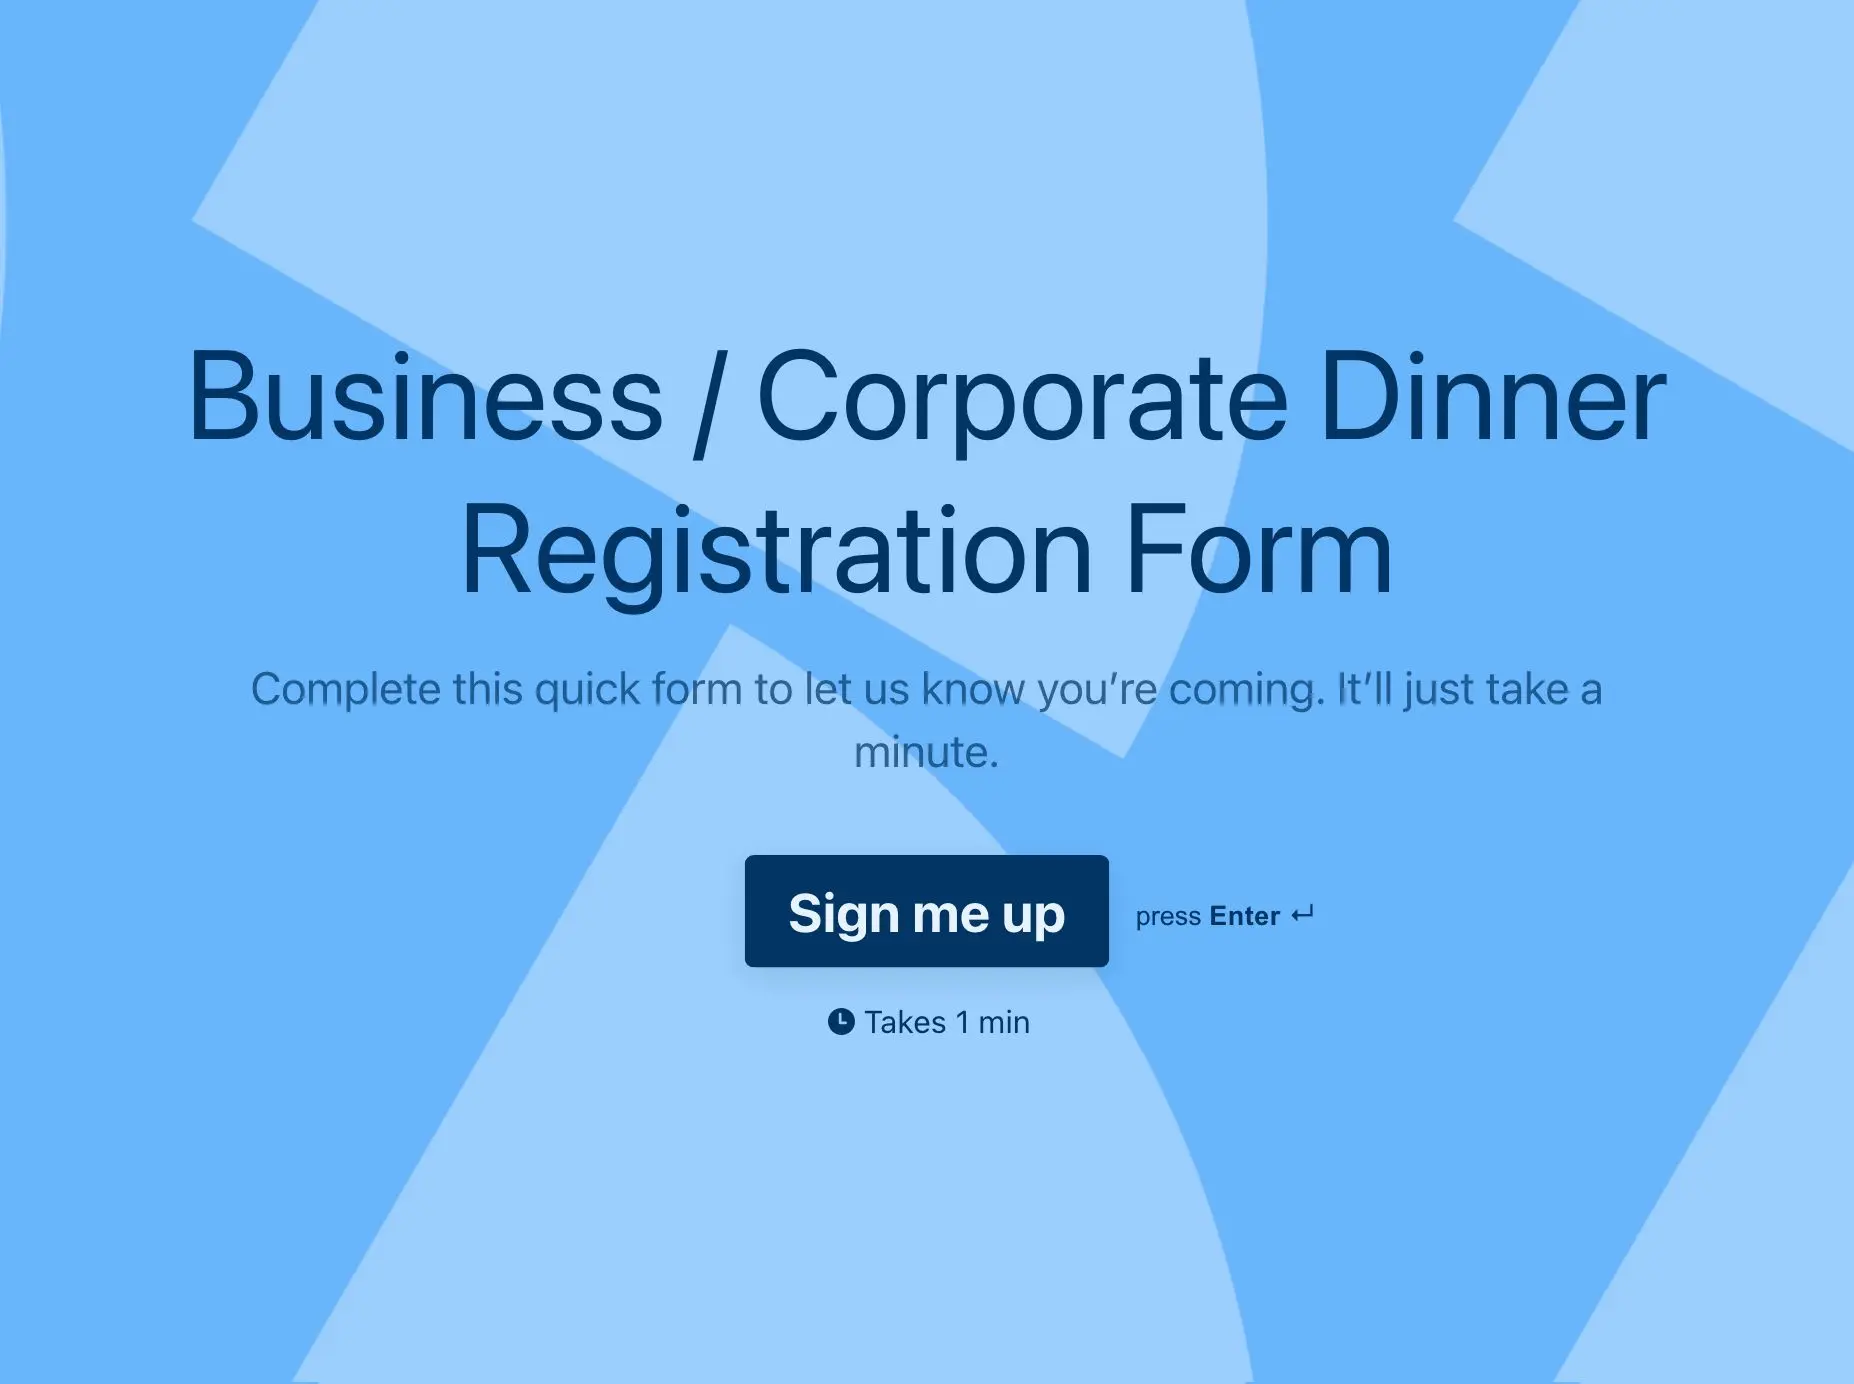 Business / Corporate Dinner Registration Form Template Hero